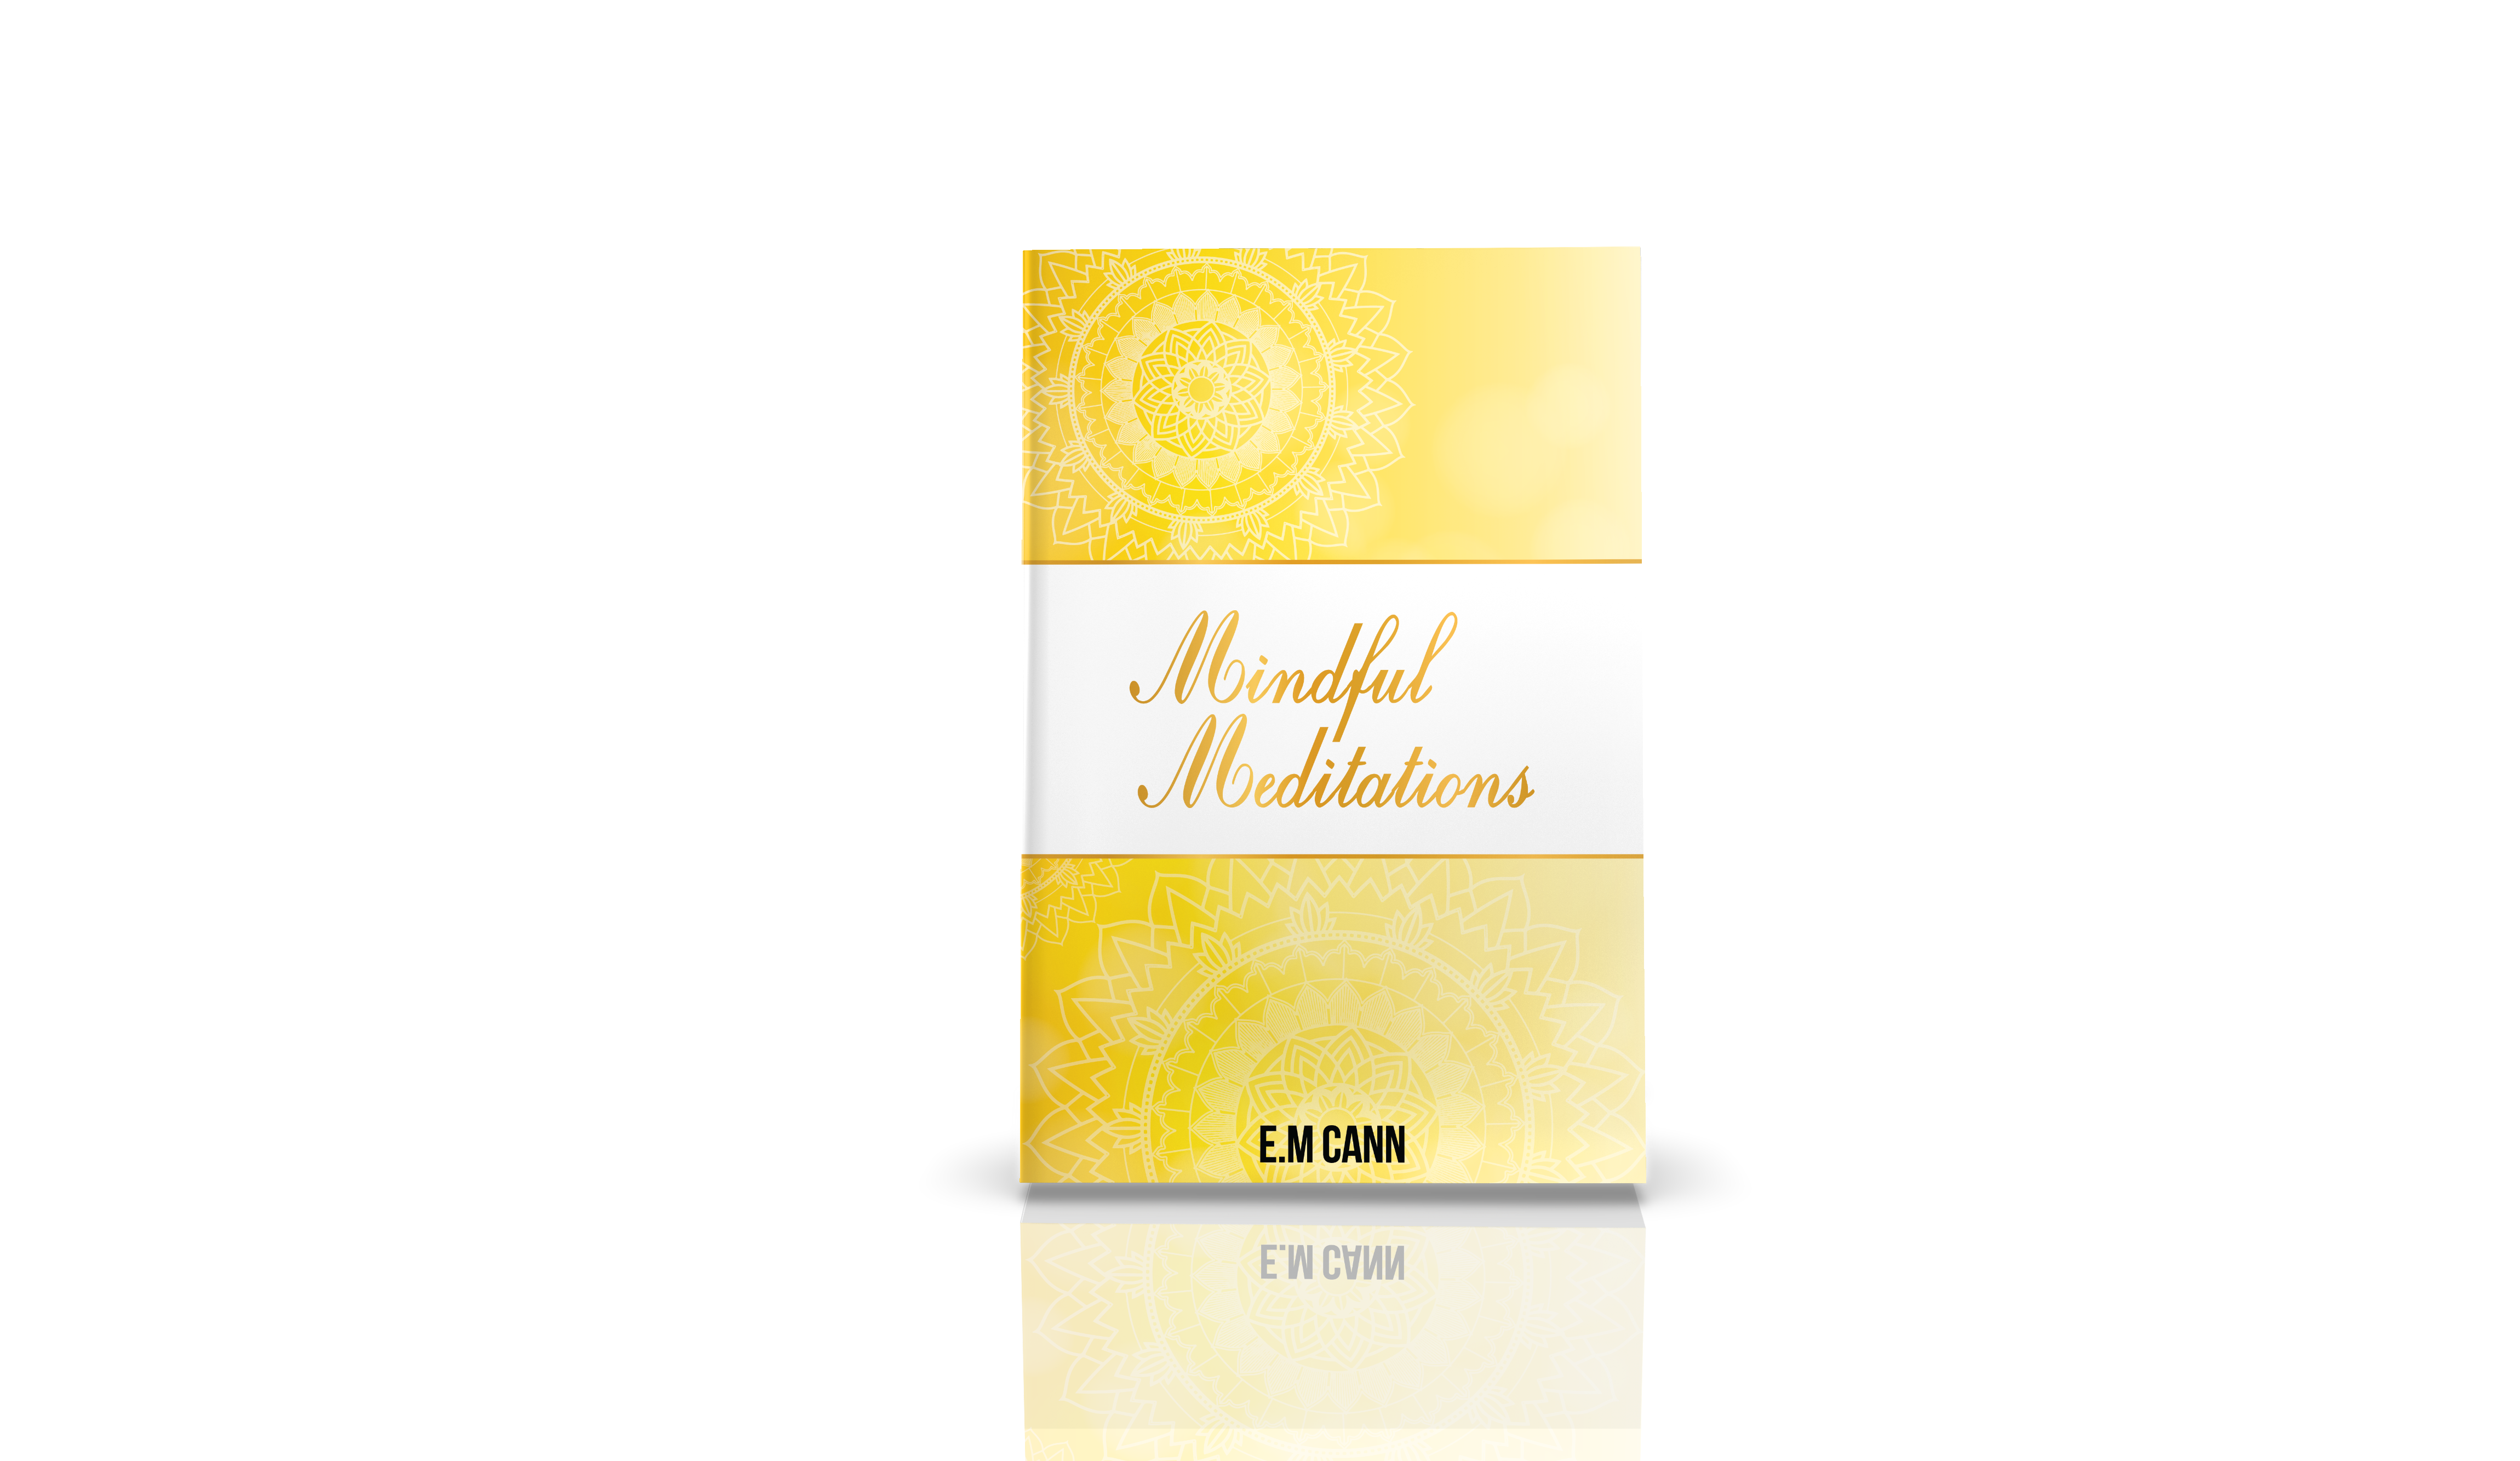 Mindfulness Meditation Book